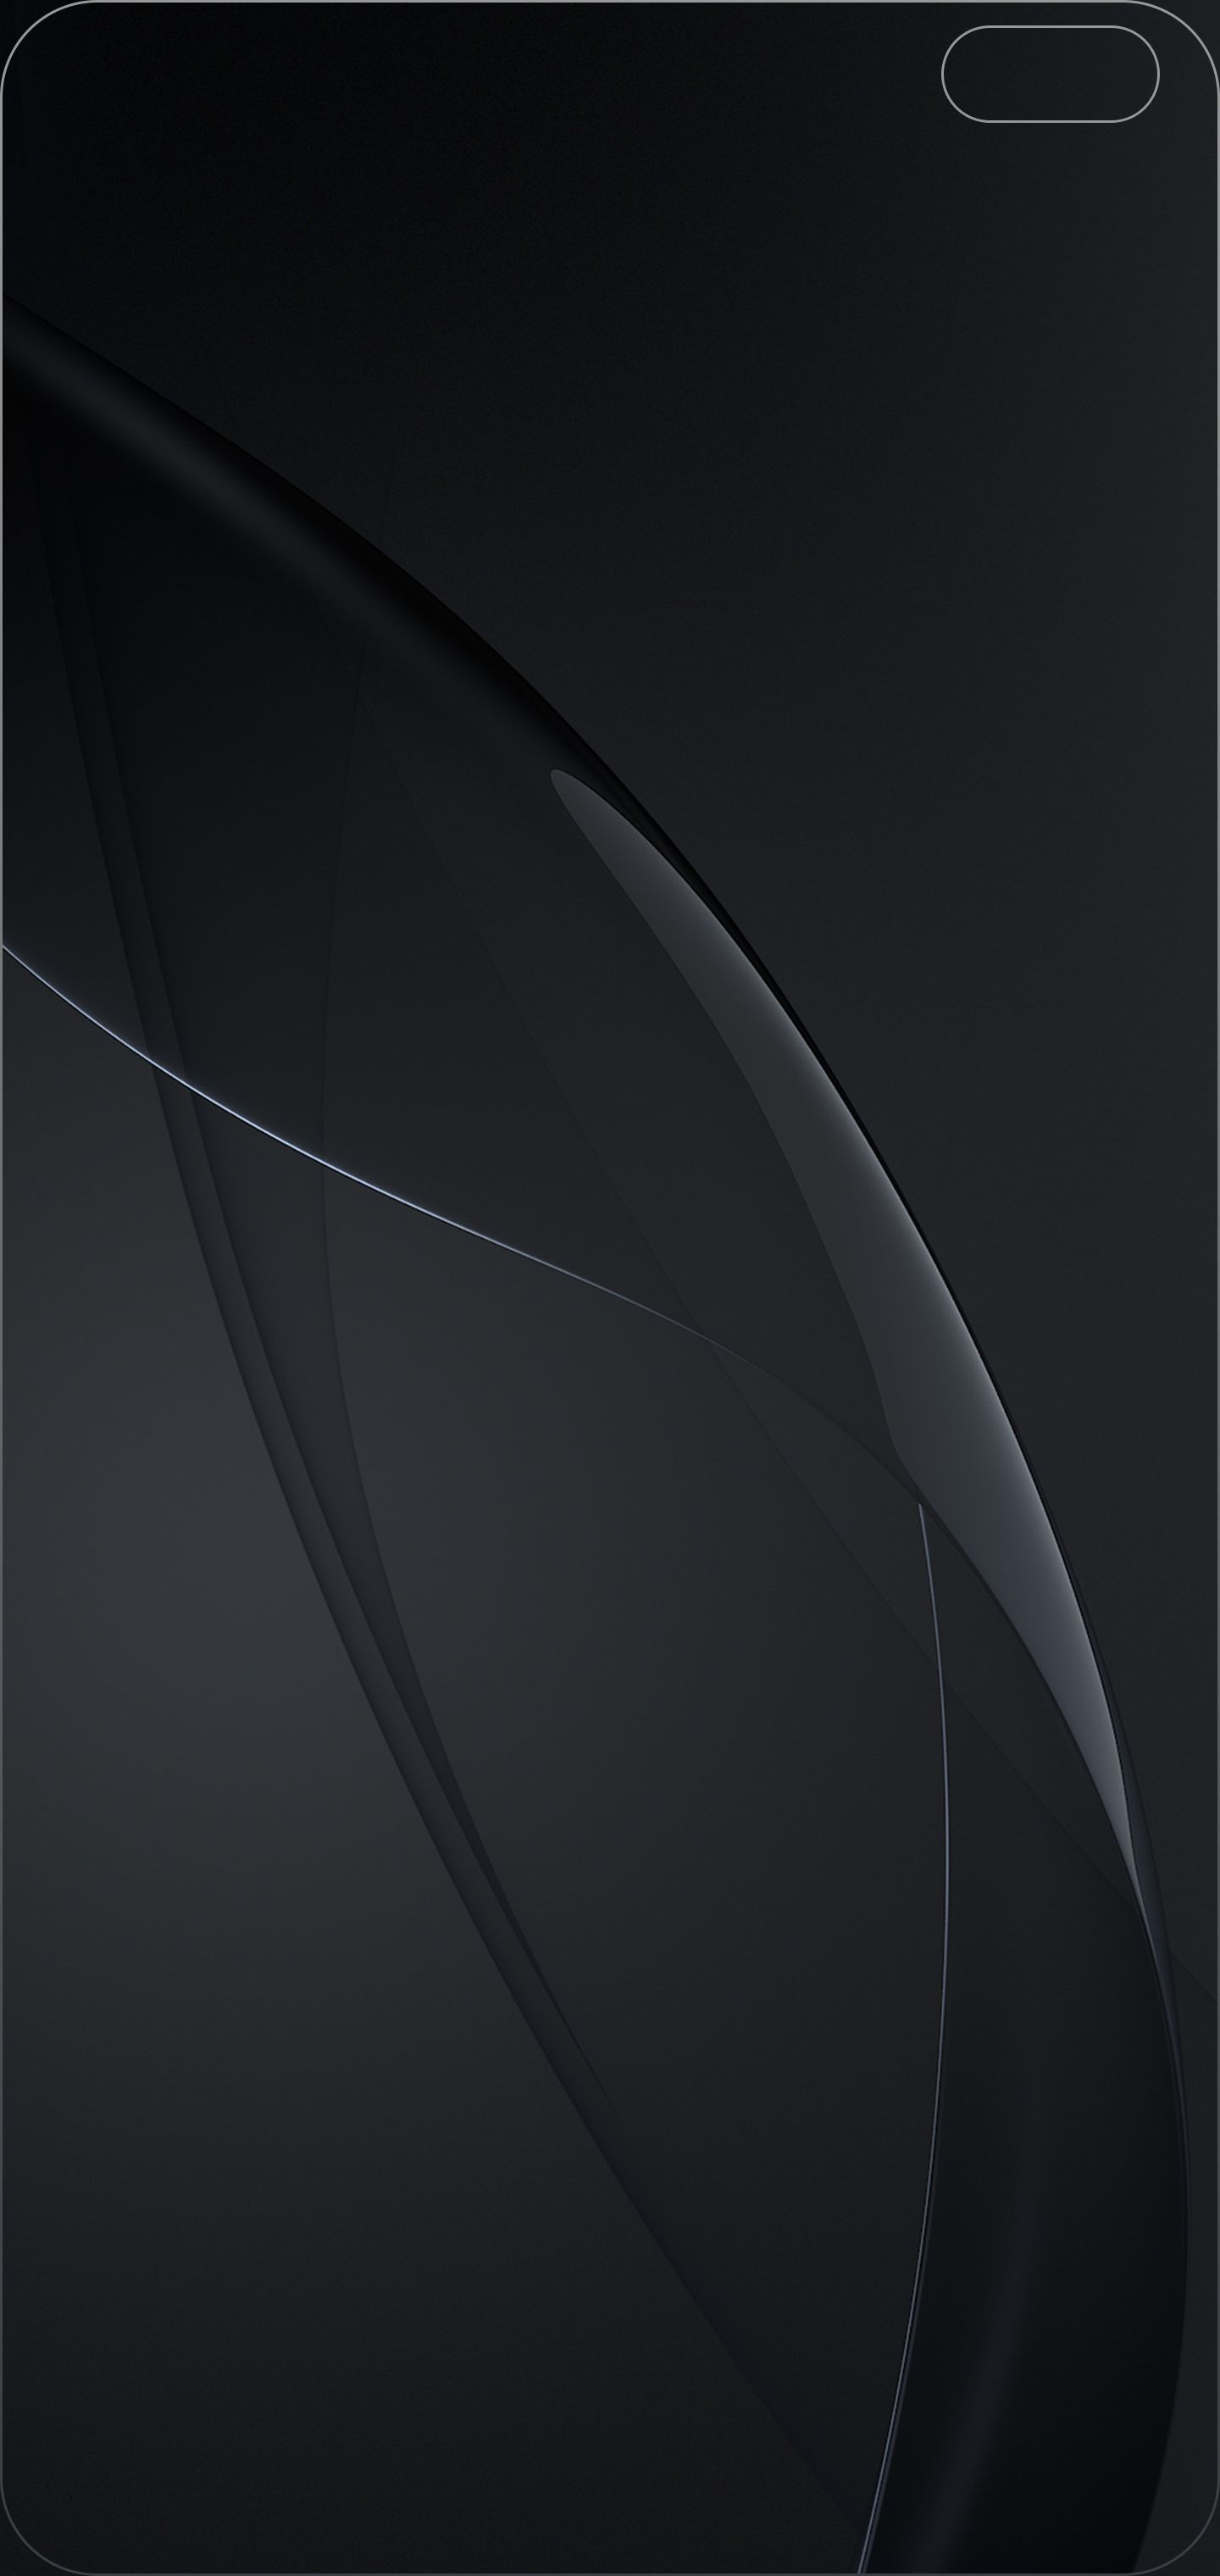 Samsung Galaxy S10 Hole Punch Wallpaper 68 - [1440x3040]